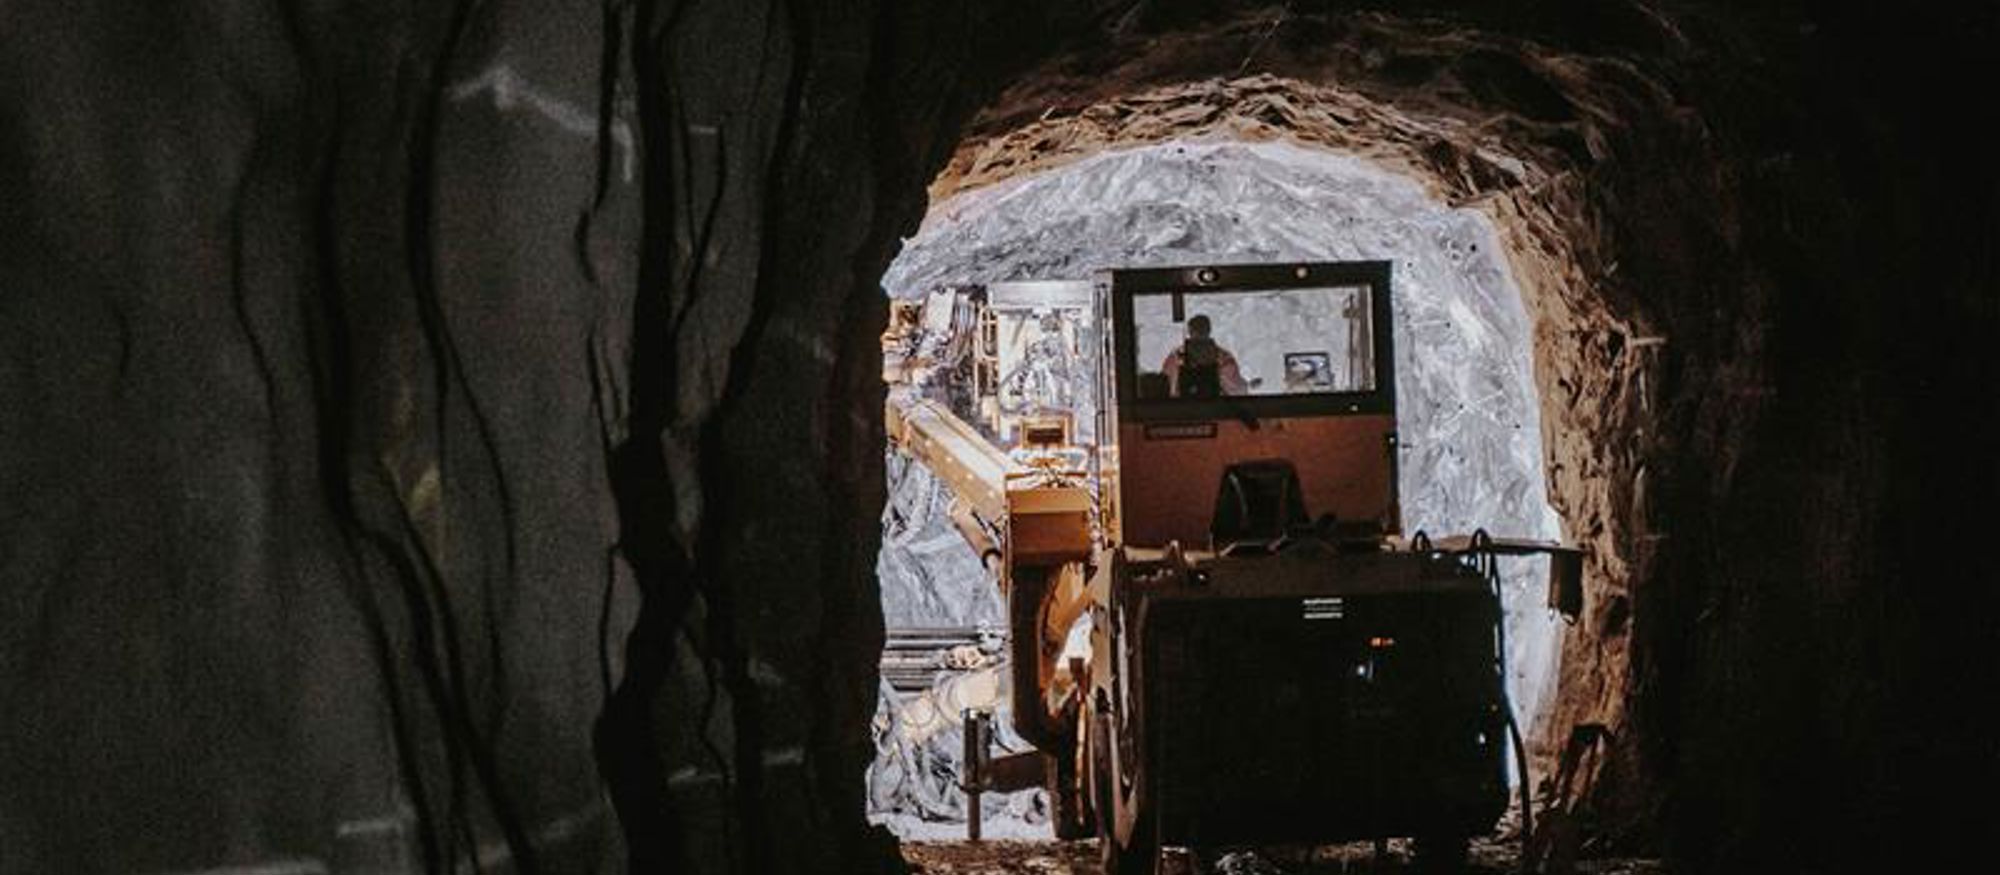 Mörk bergtunnel med anläggningsmaskin i ljuset i mynningen